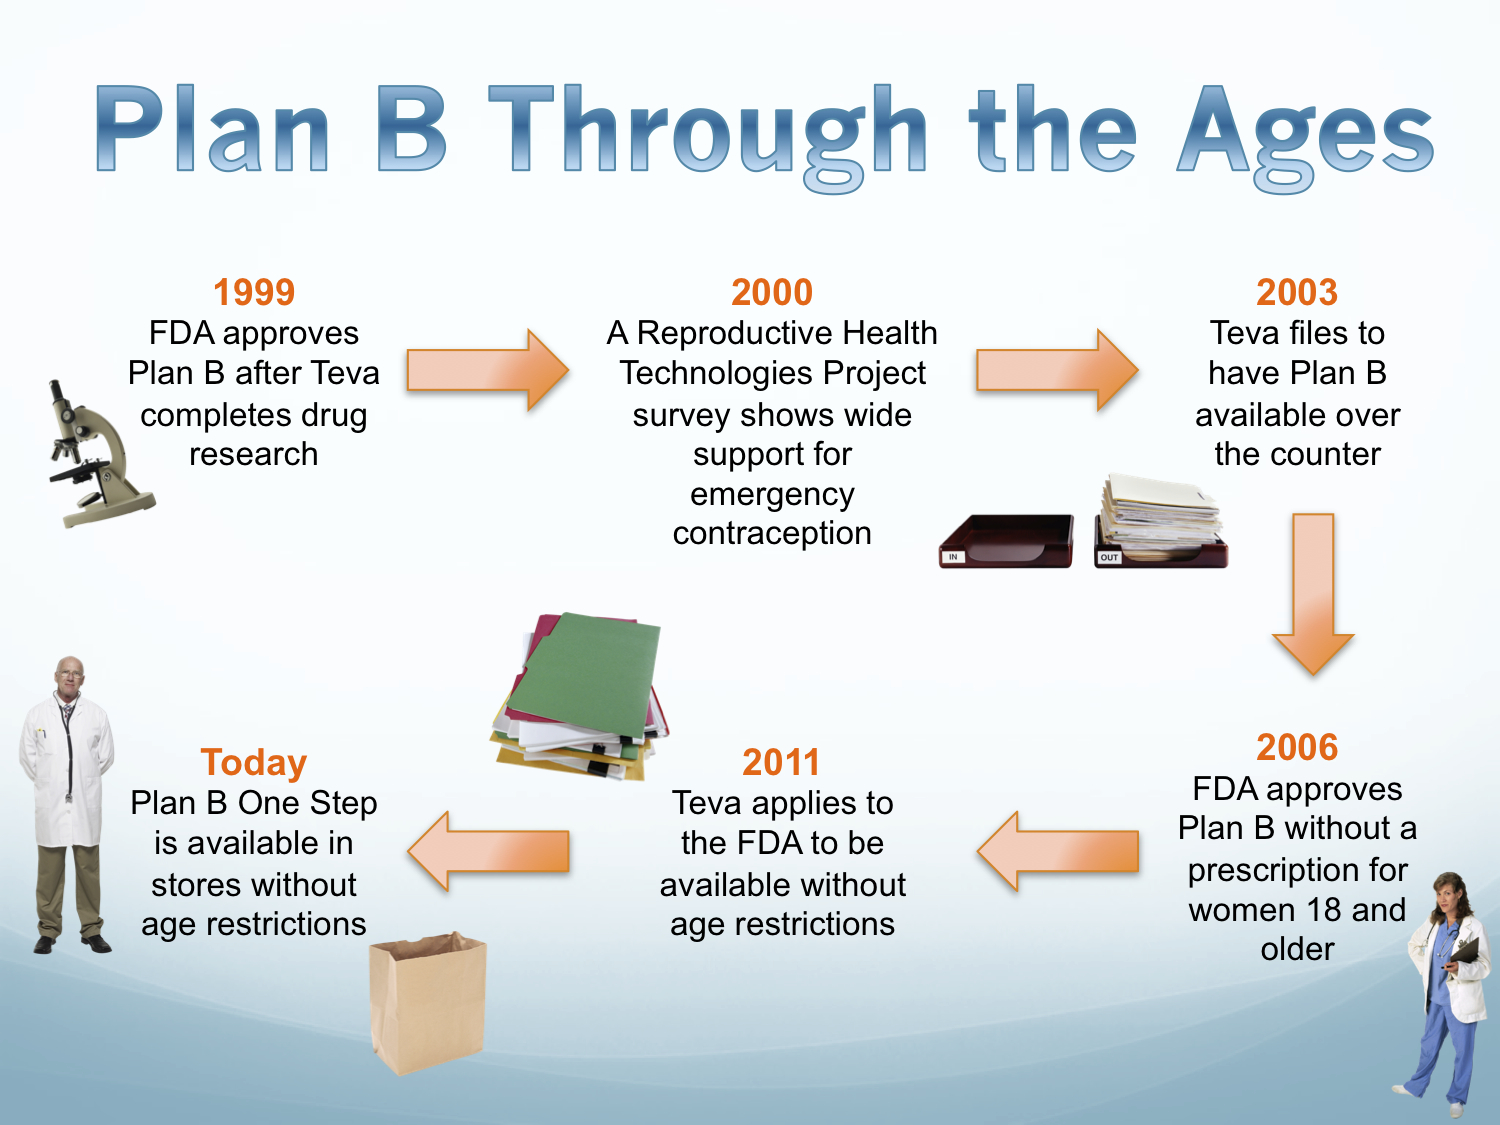 Age restrictions вопрос ЕГЭ. PLANB Step. Plan a Plan b Plan c Мем. Plan b (Операционная система). Without age